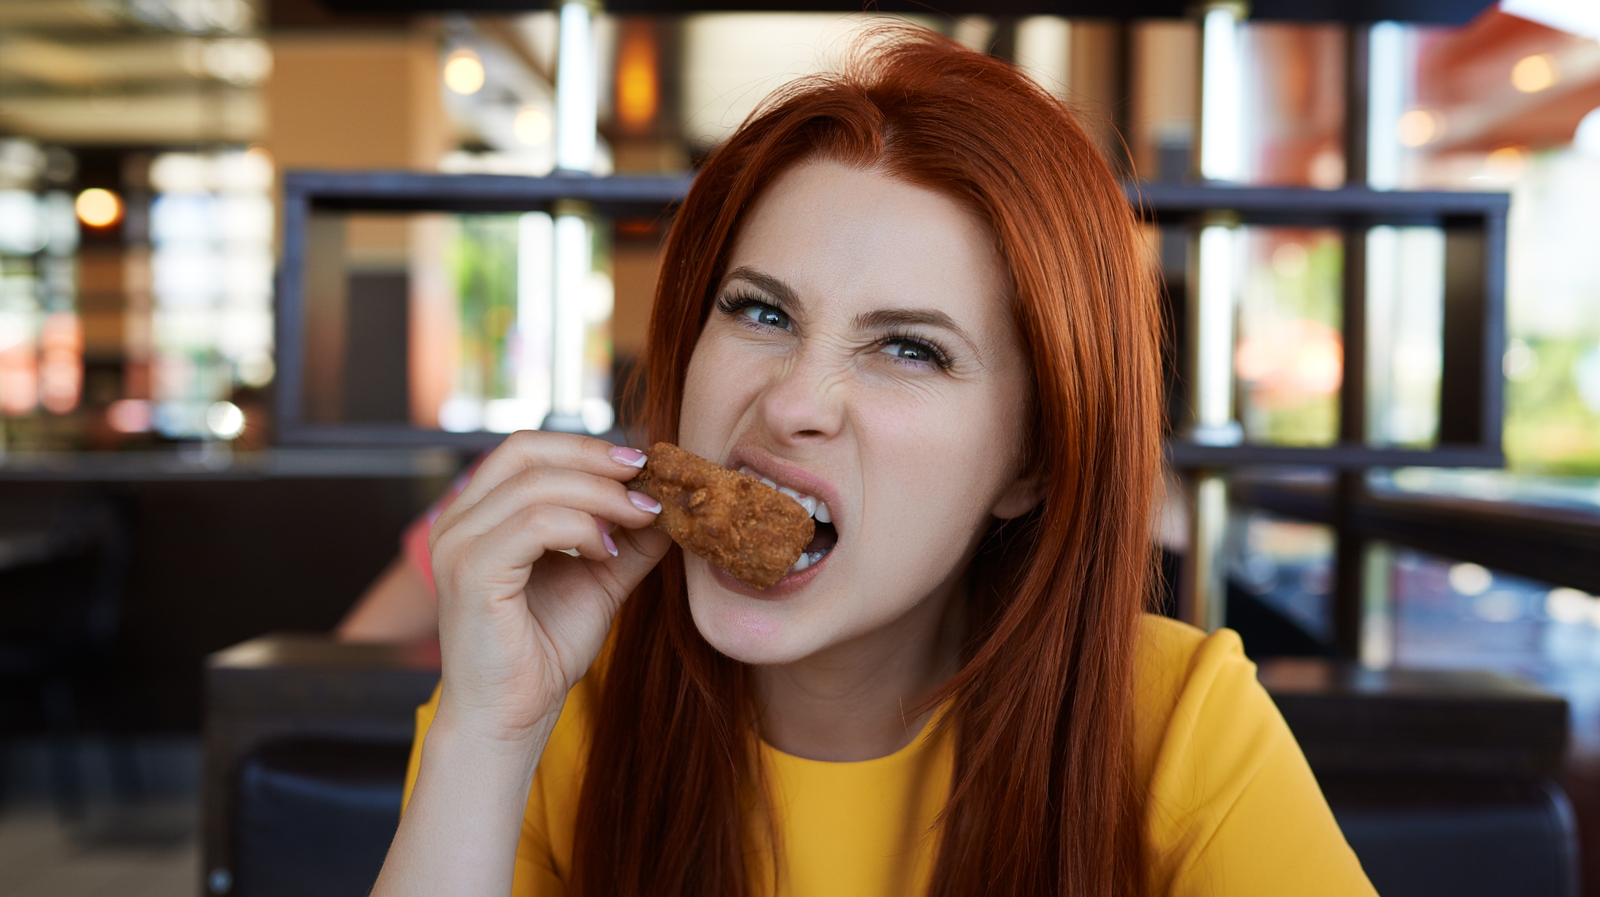 Mukbang The Bizarre Trend Where Women Eat Junk Food On Camera 0056